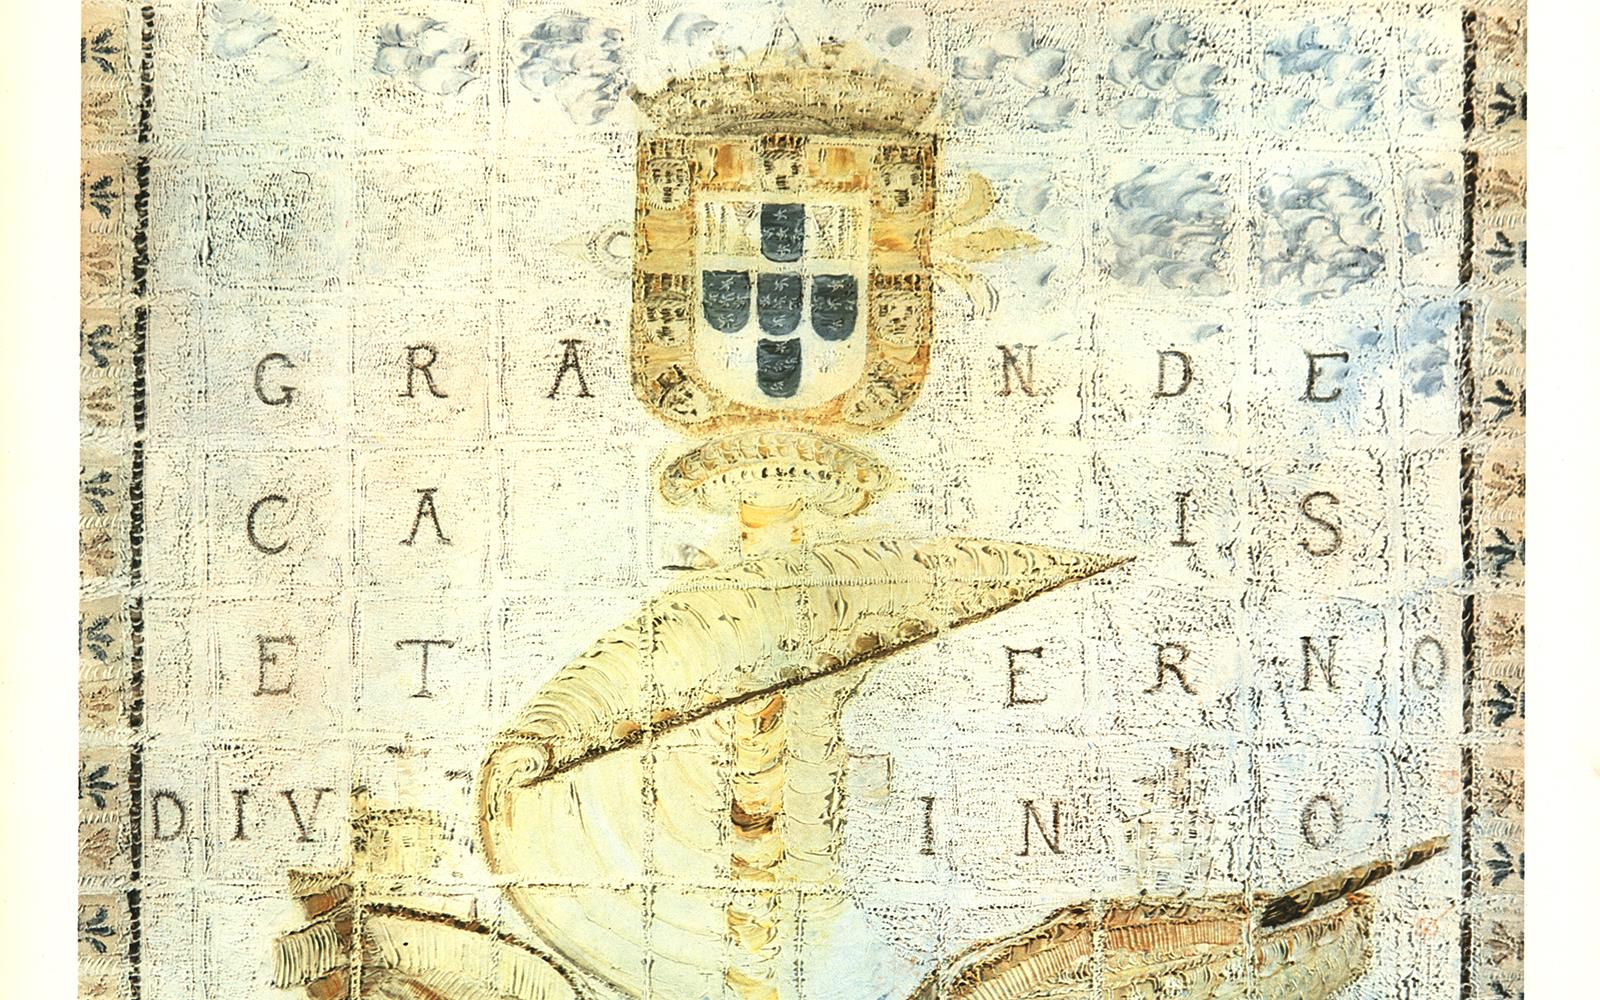 Azulejos, Arraiolos e Bandeiras de Portugal de Pierluigi Alverà